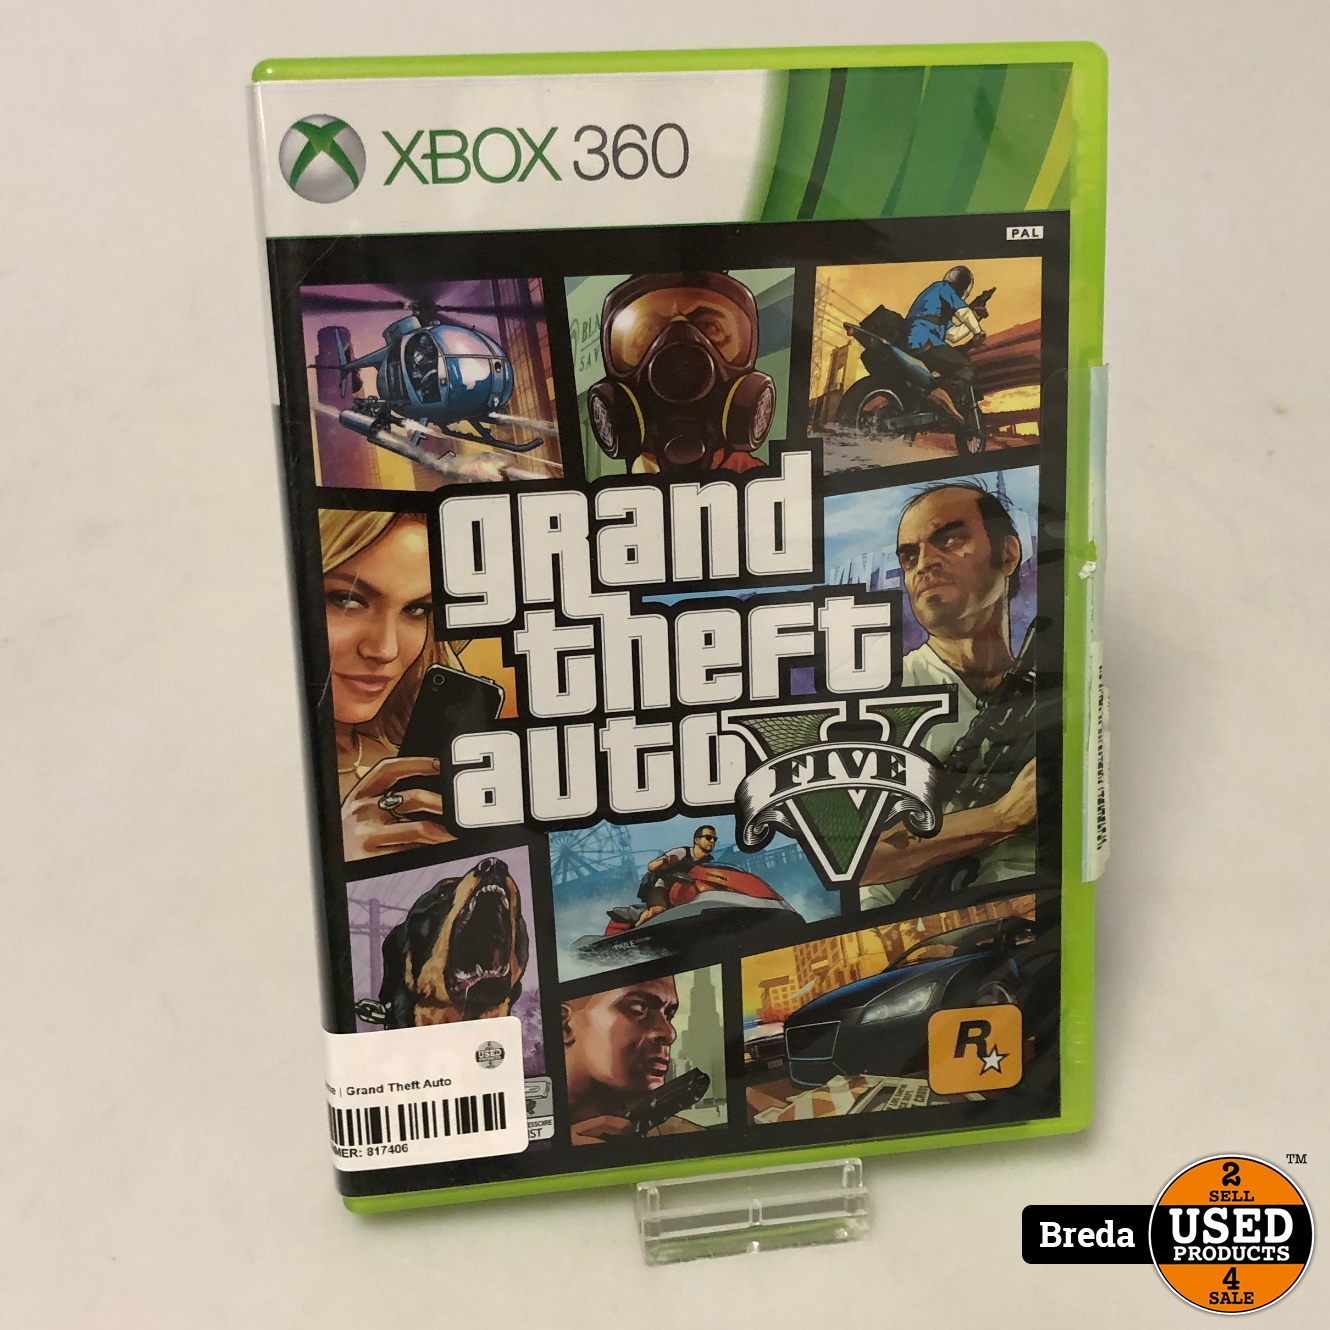 Xbox 360 spel | Theft Auto Five - Used Products Breda